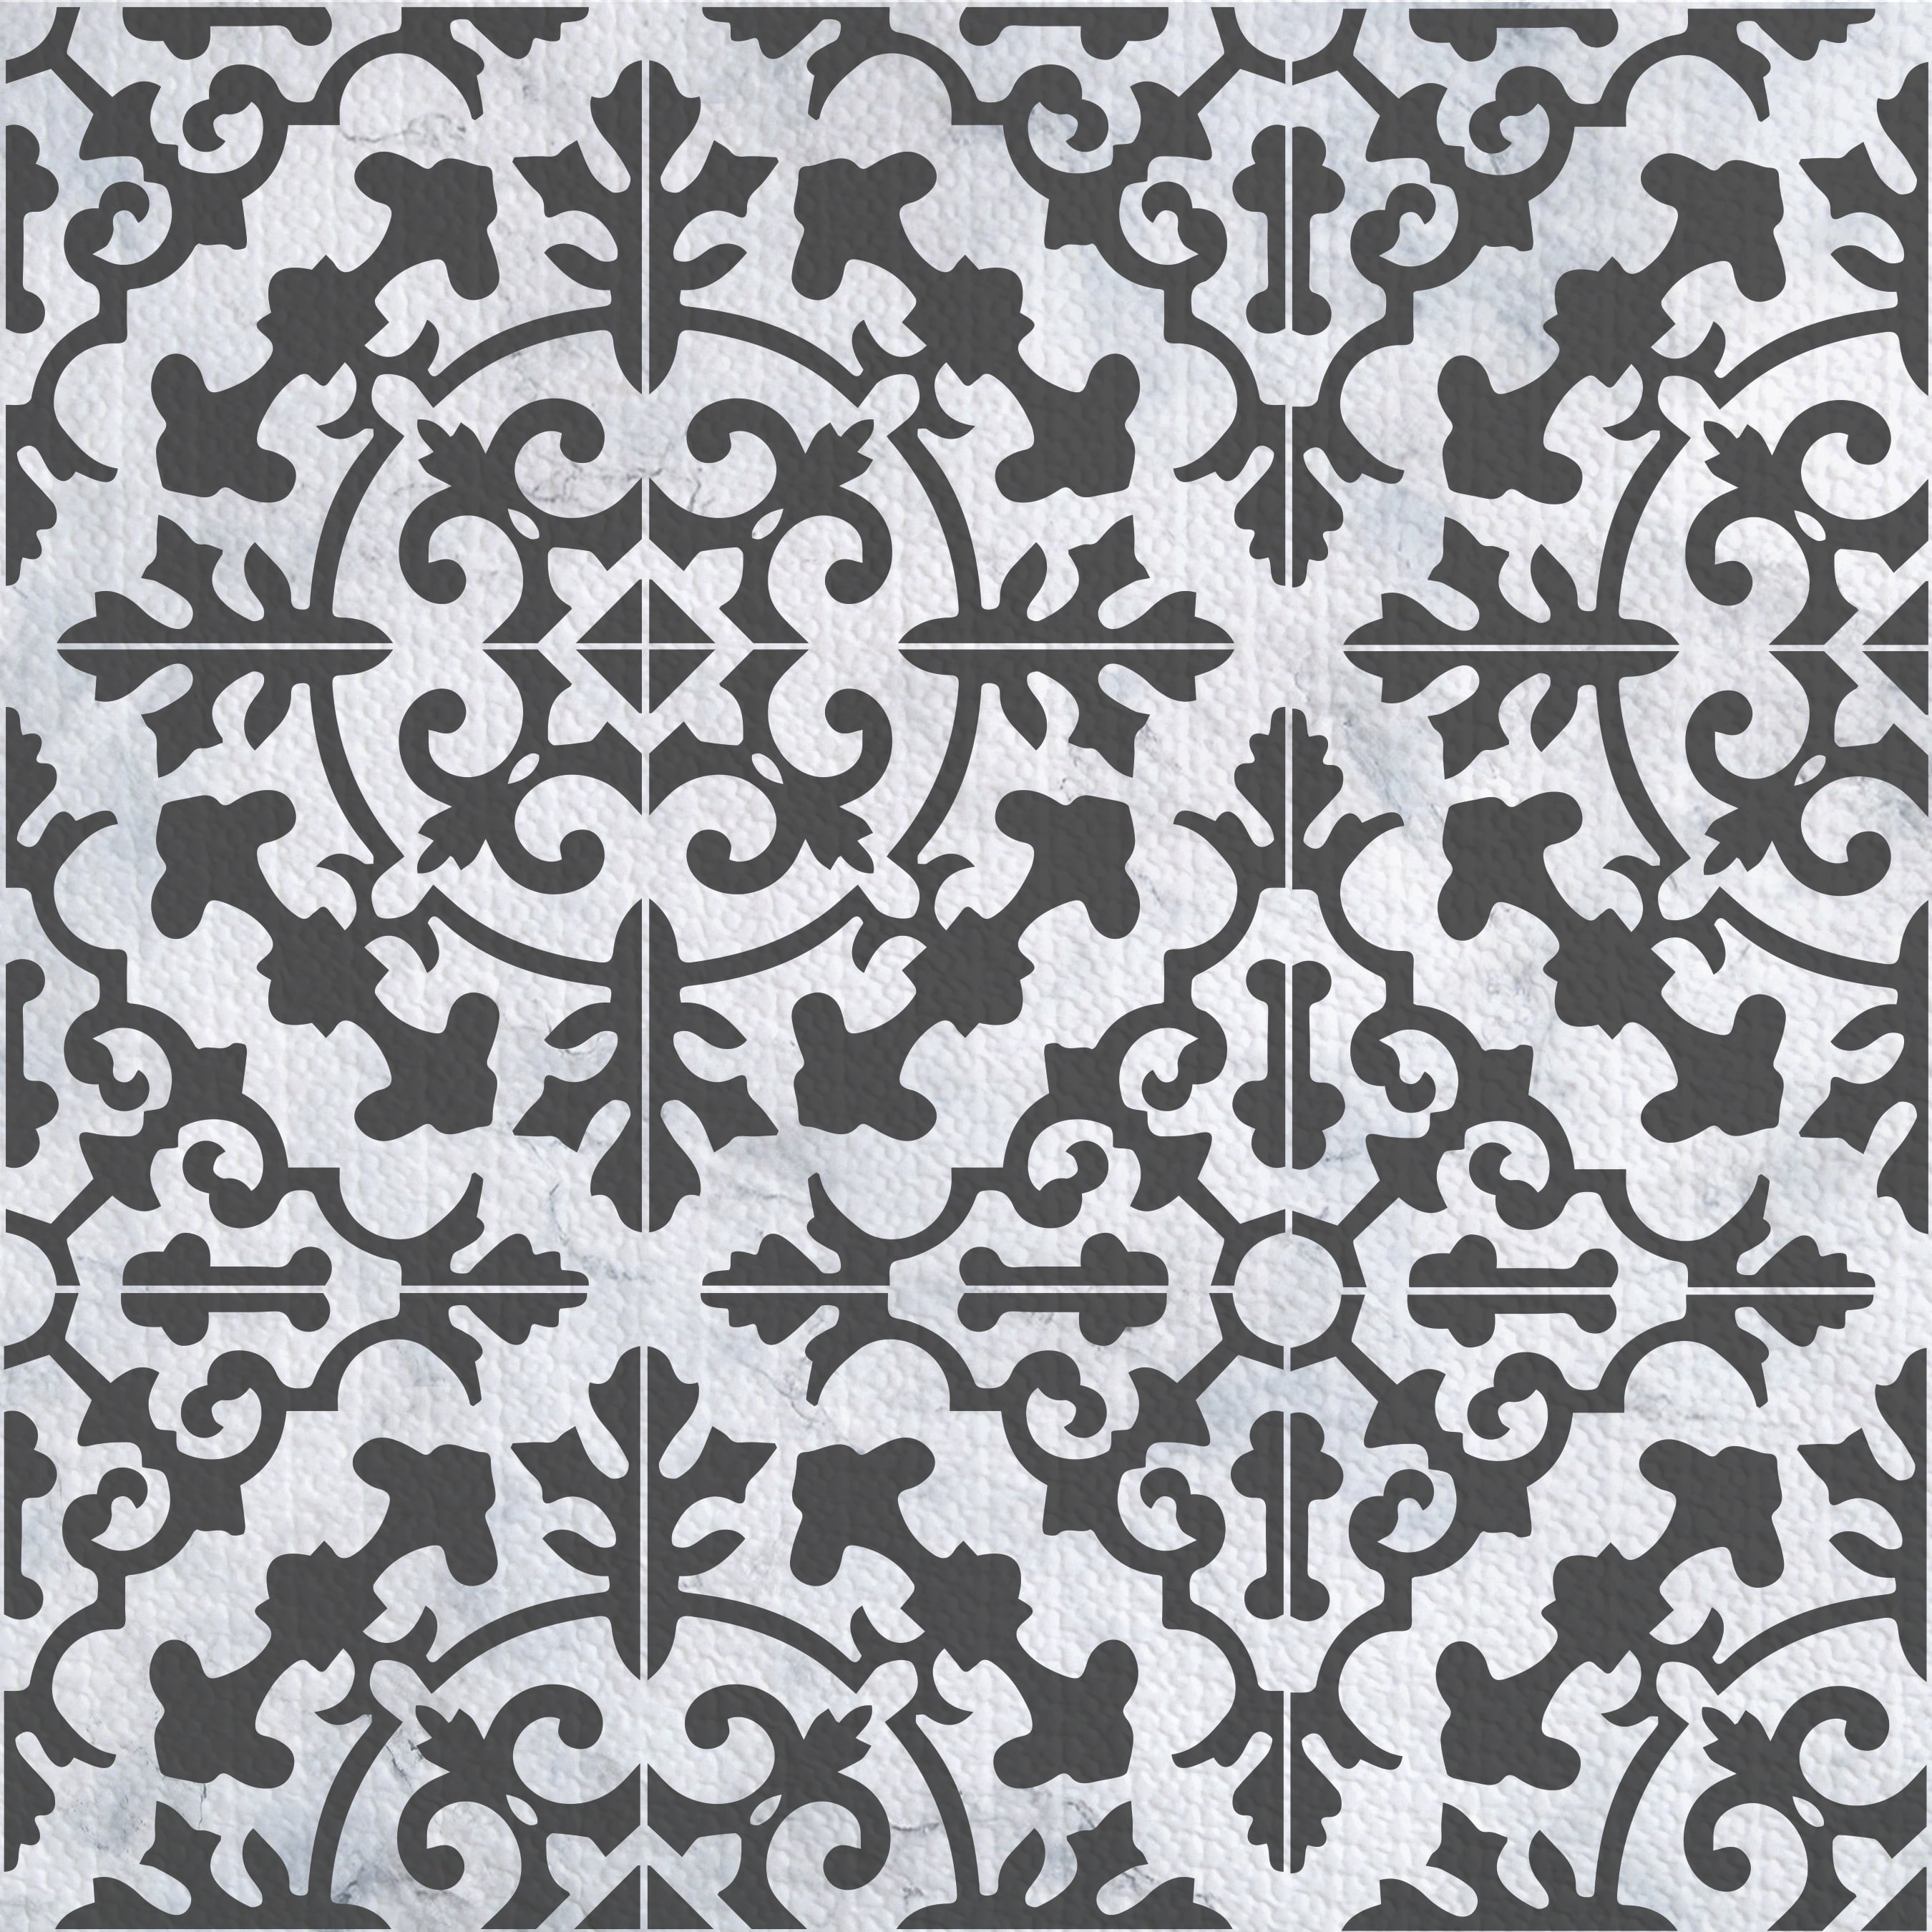 Con-Tact Grip Prints Black and White Granite Shelf/Drawer Liner